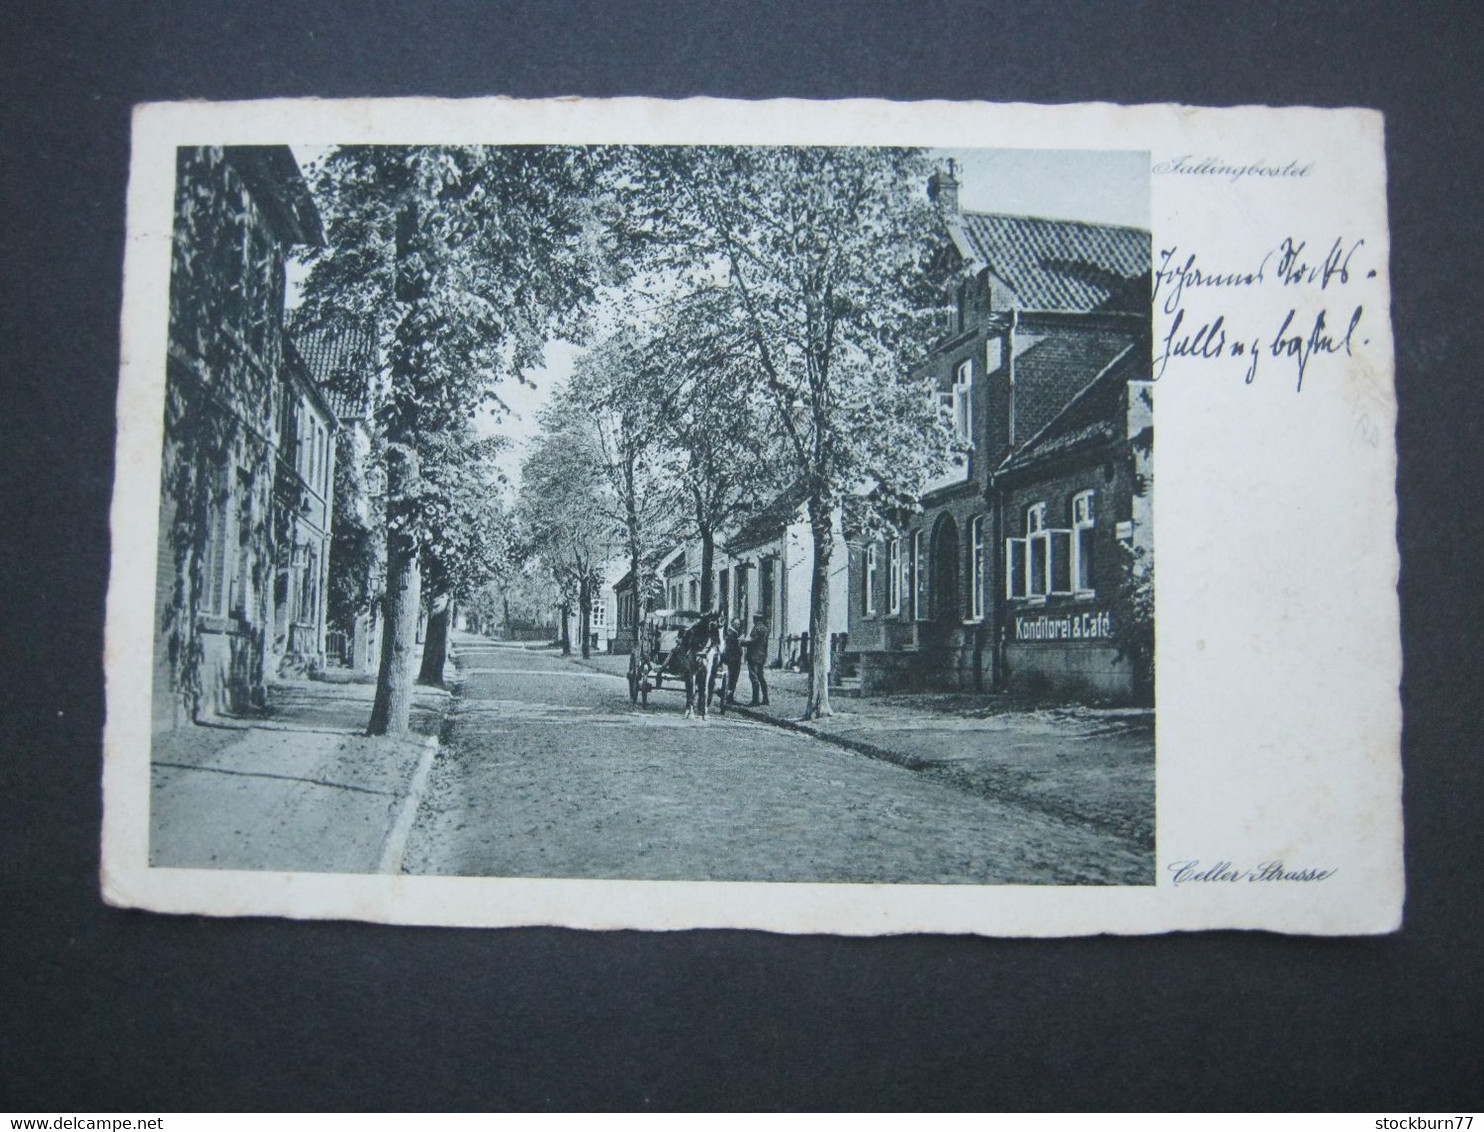 FALLINGBOSTEL , Strasse  Schöne Karte  Um 1927, Eckknick - Fallingbostel